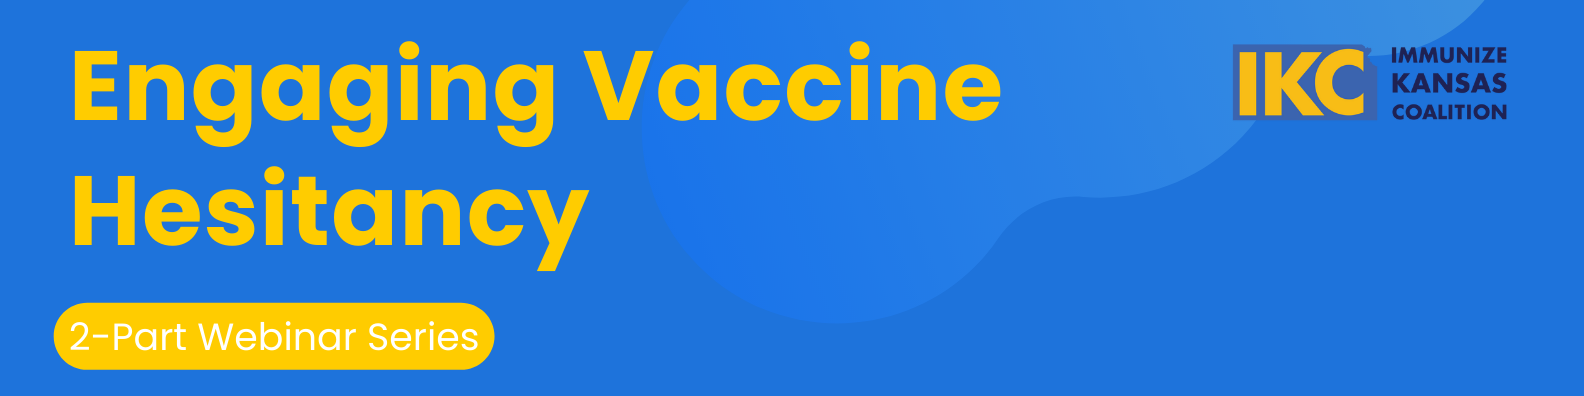 IKC Engaging Vaccine Hesitancy Banner